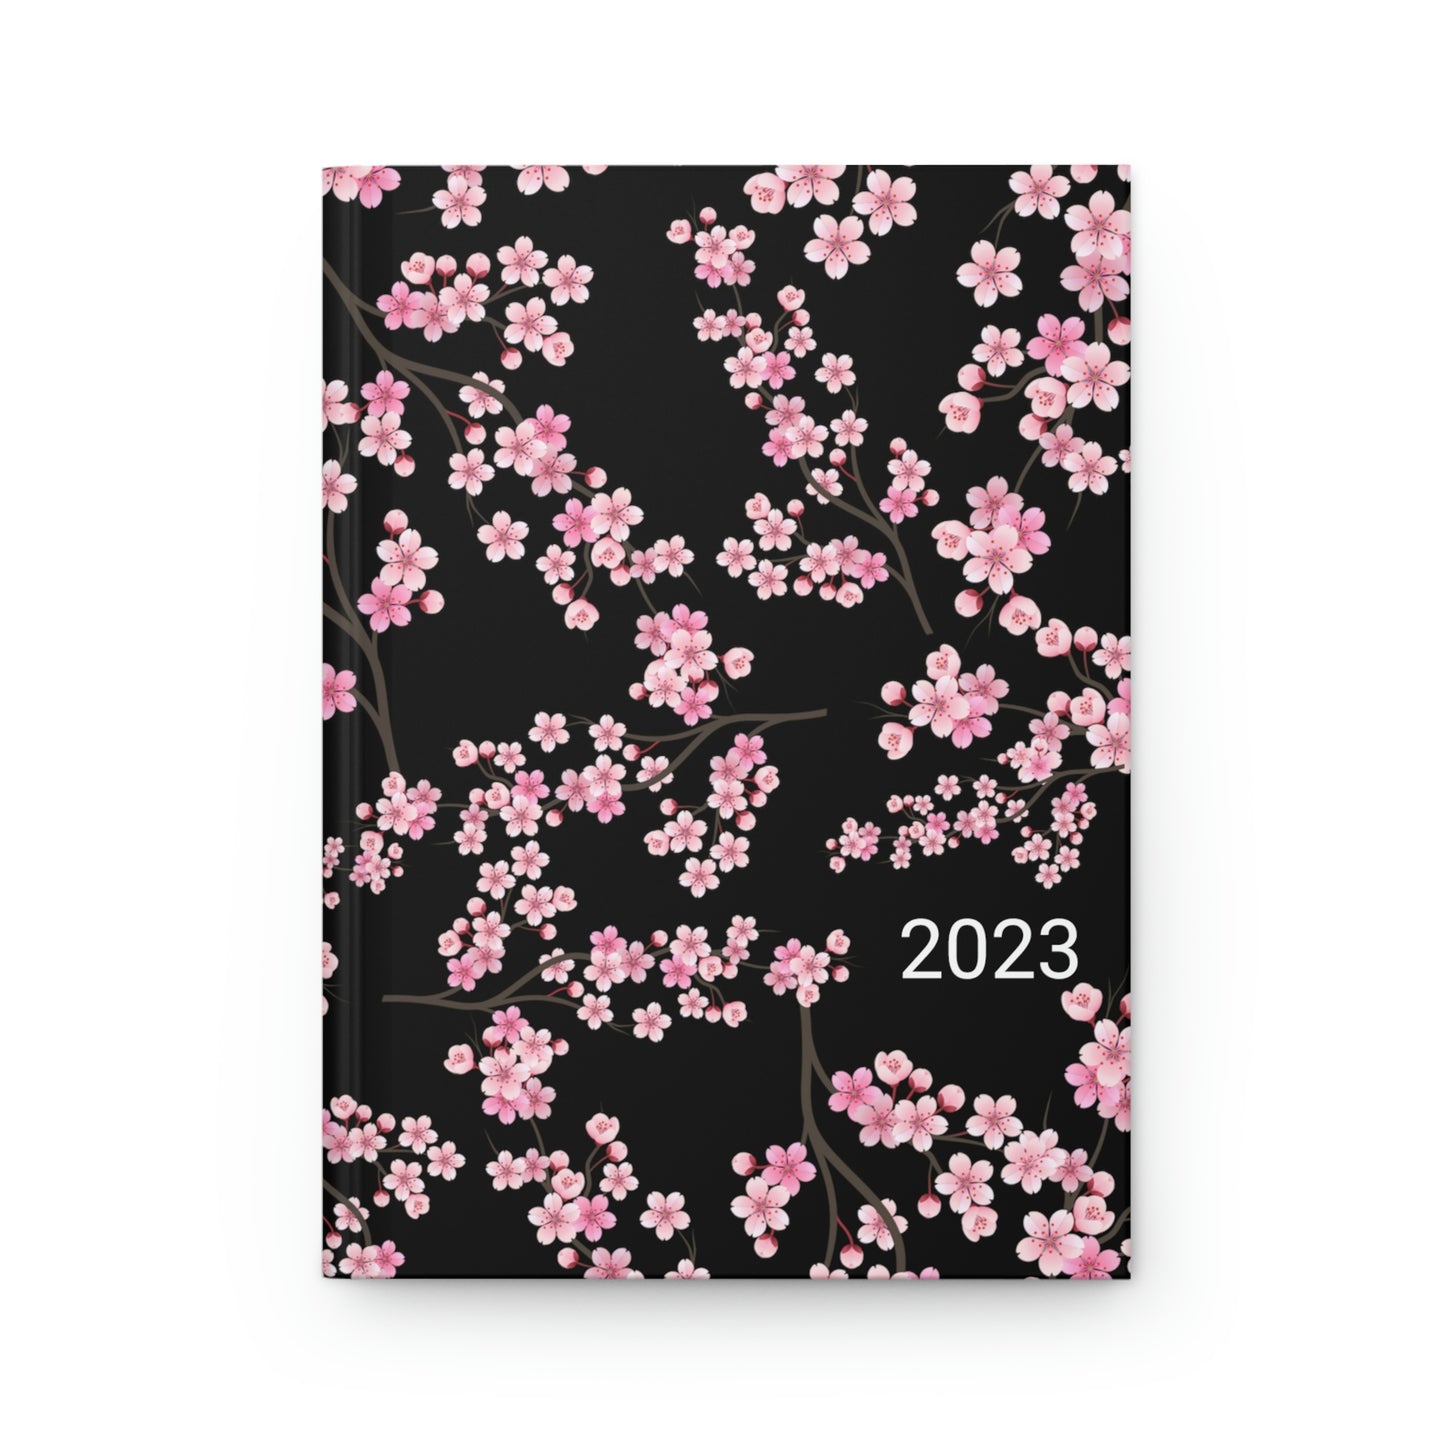 2023 spring custom cherry blossom journal or notebook